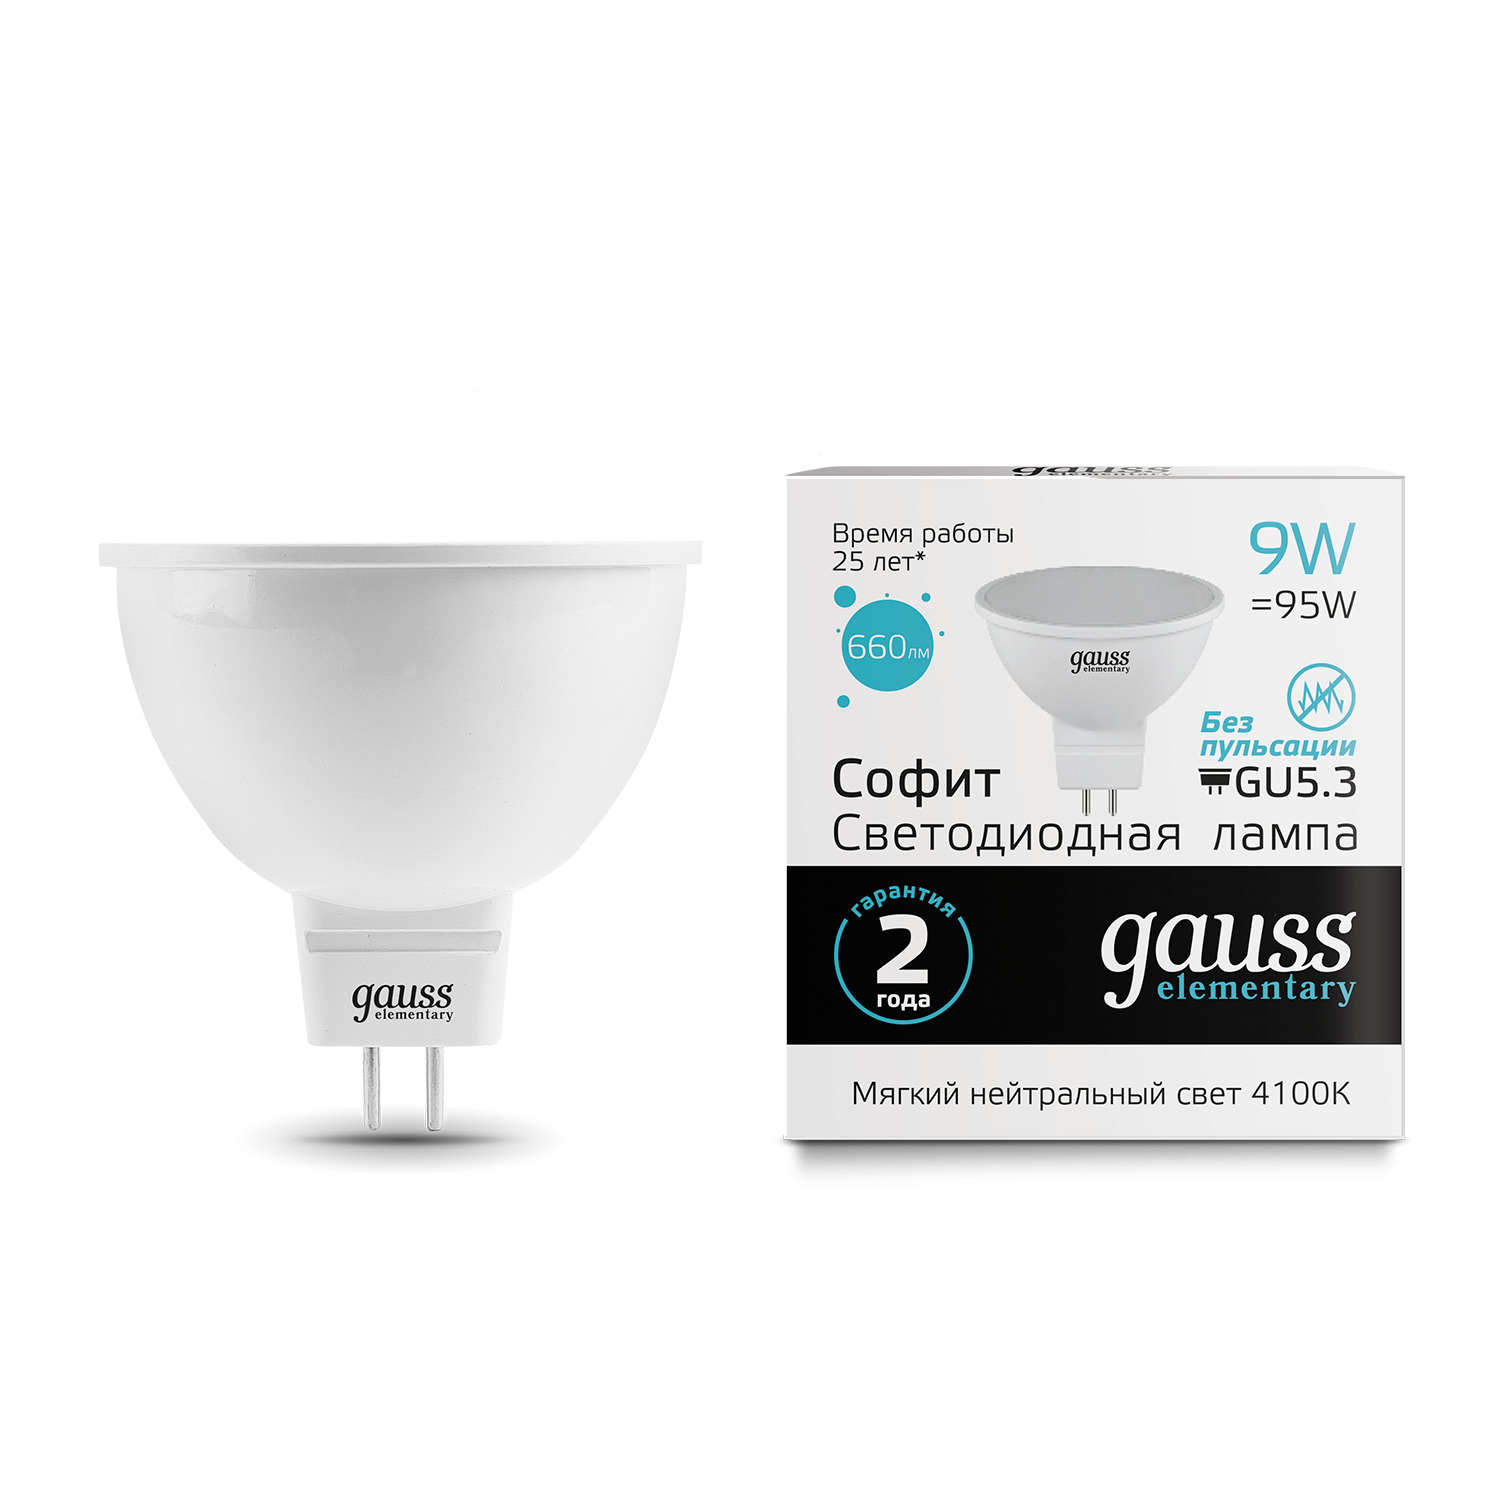 Лампа Gauss LED Elementary MR16 GU5.3 9W 4100K gauss elementary gx53 9w 230v белый свет